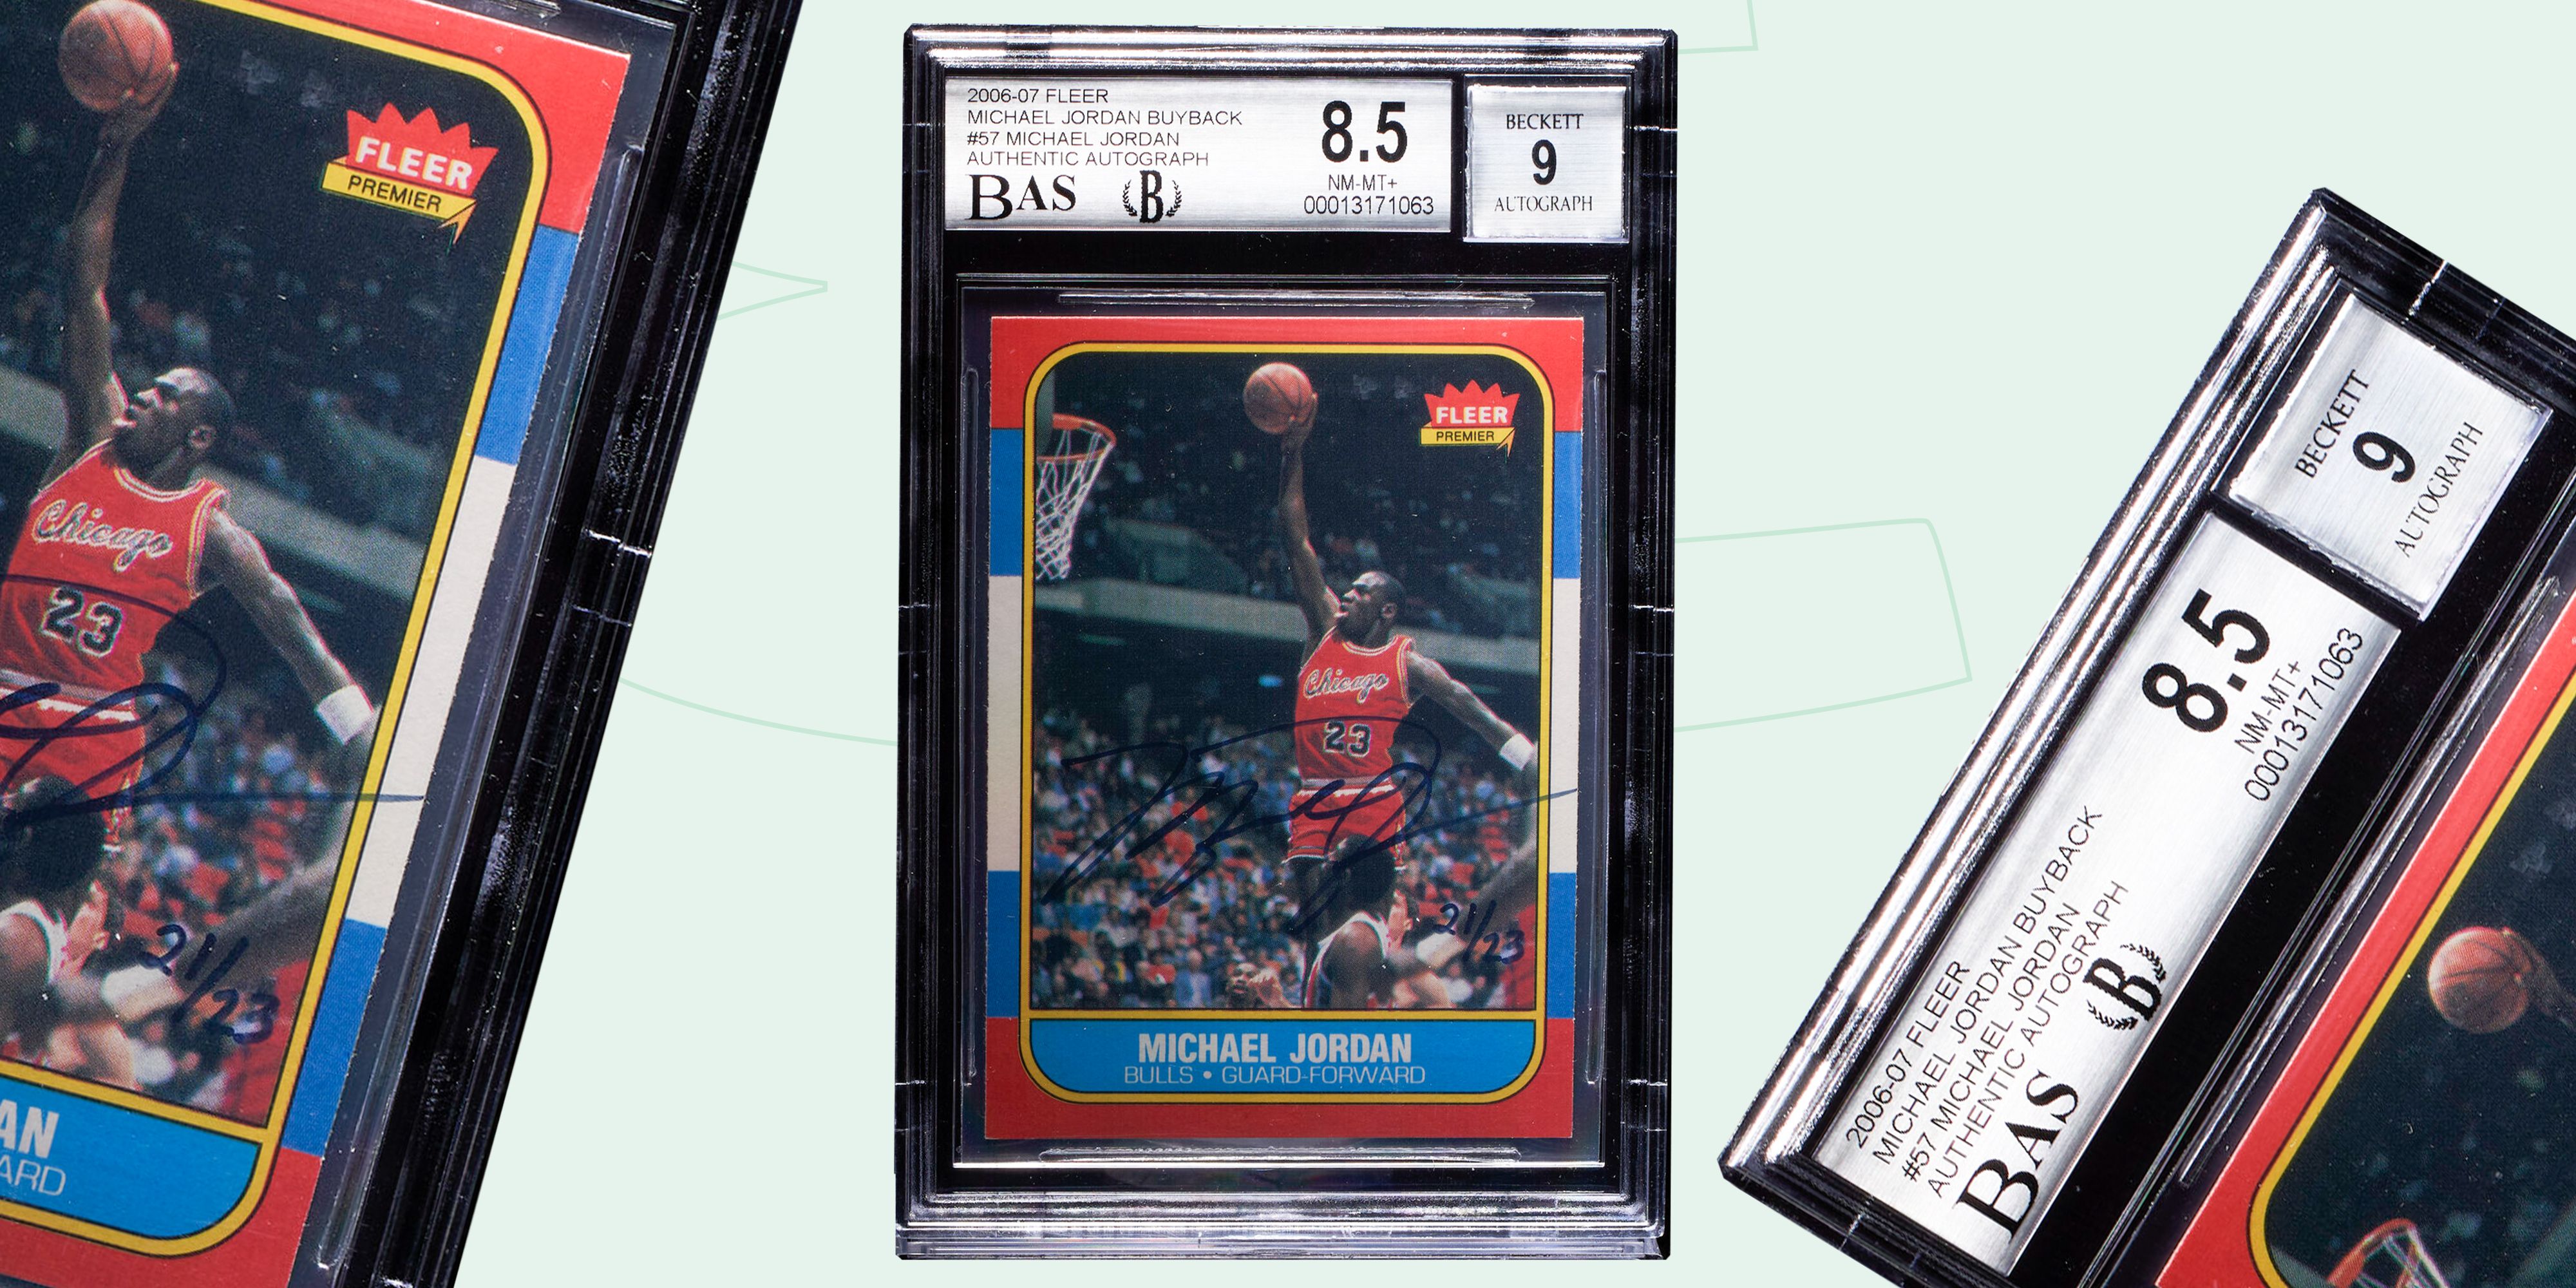 Michael Jordan Cards - Michael Jordan Rookie Card For Sale